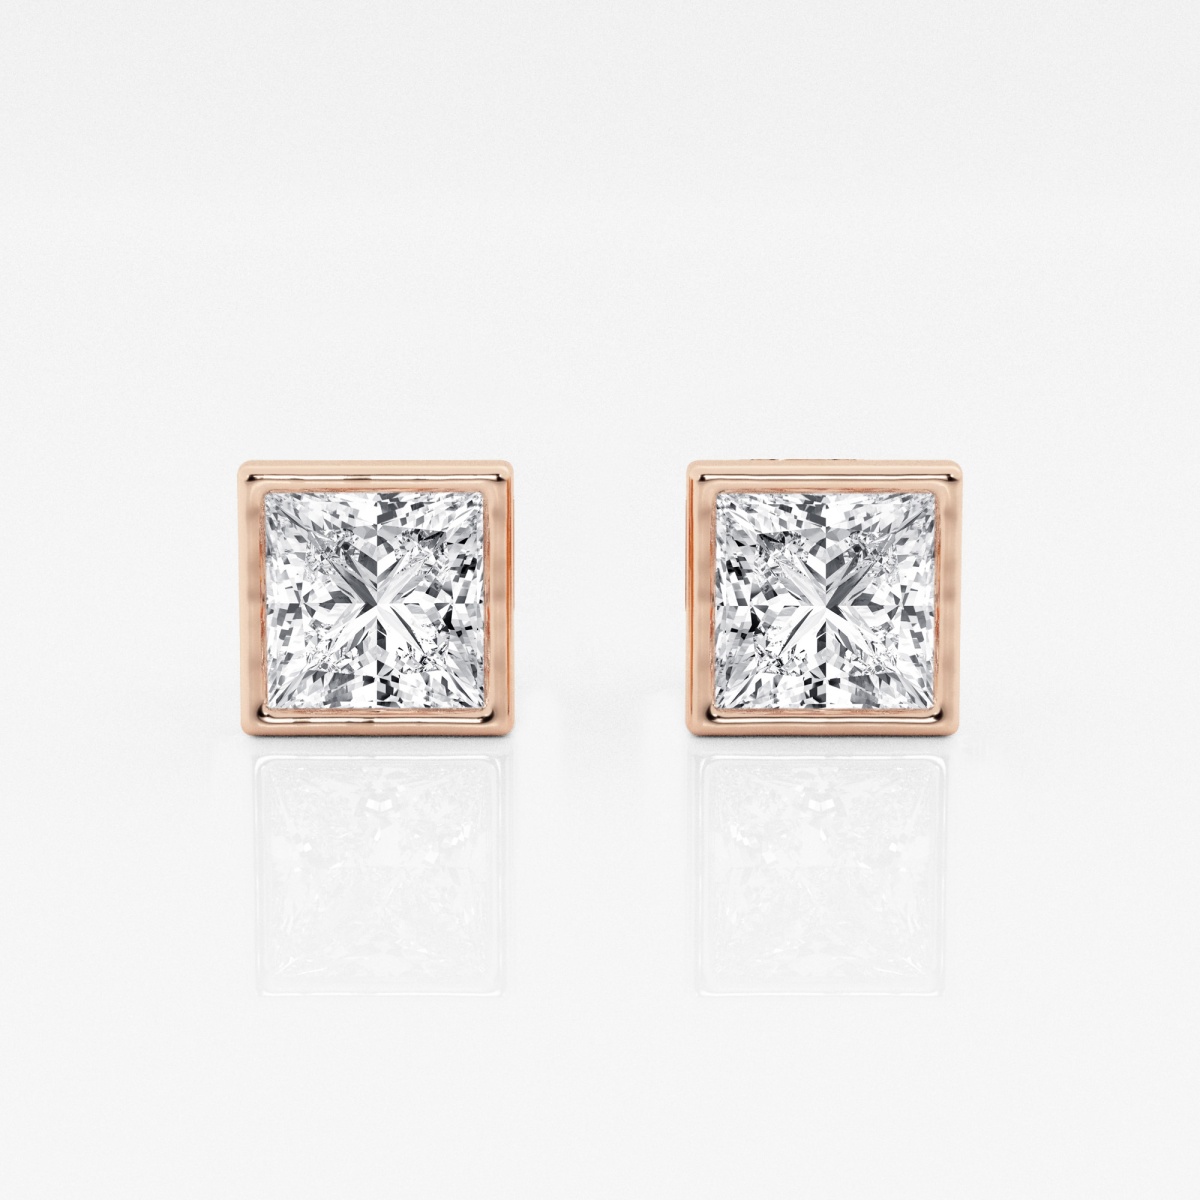 2 ctw Princess Lab Grown Diamond Bezel Set Solitaire Certified Stud Earrings